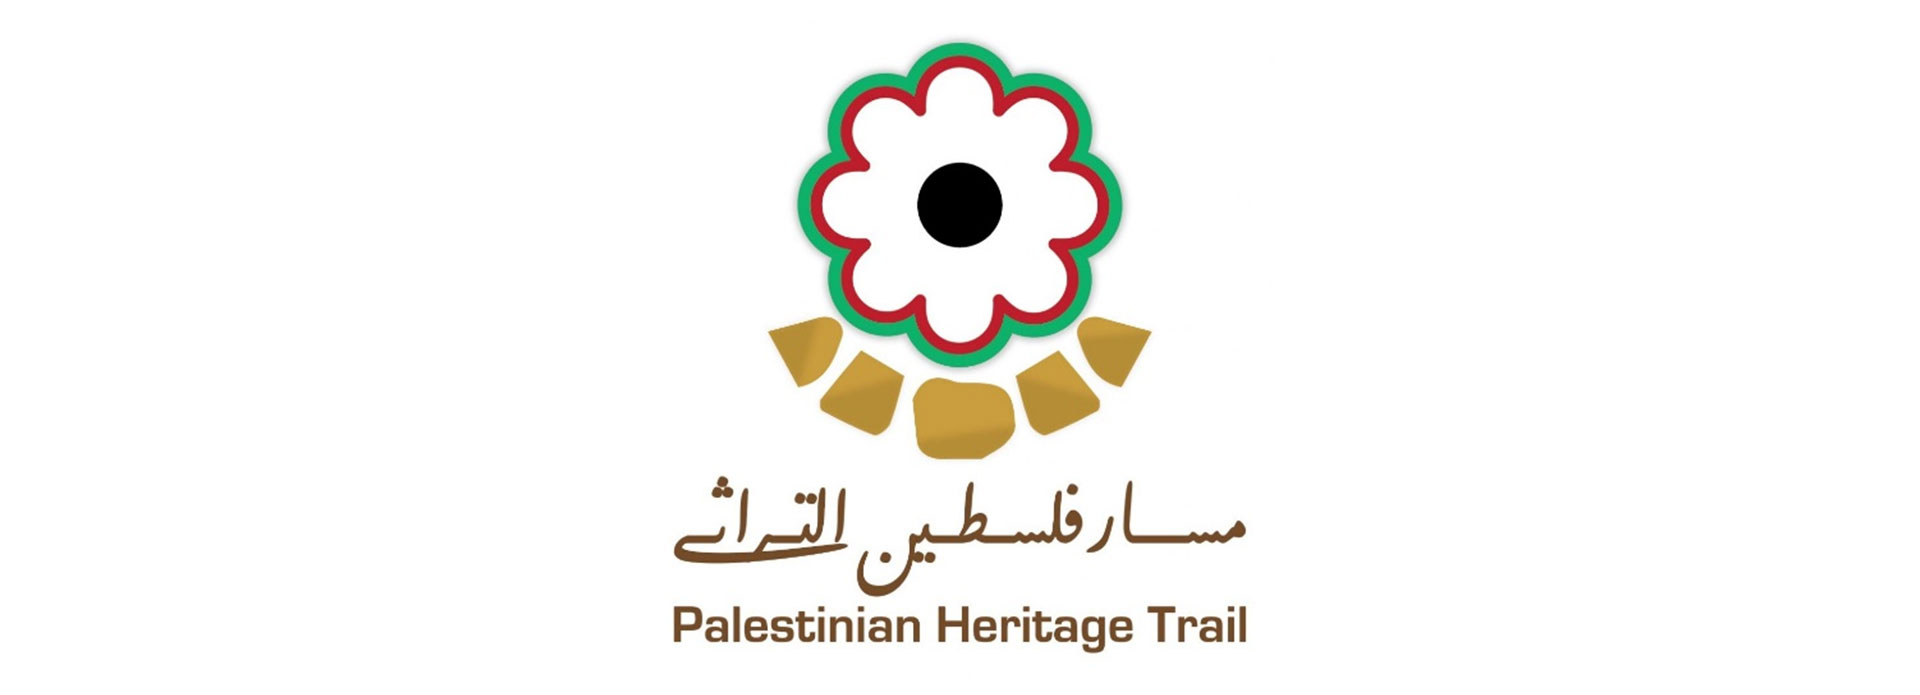 The Palestine Heritage Trail